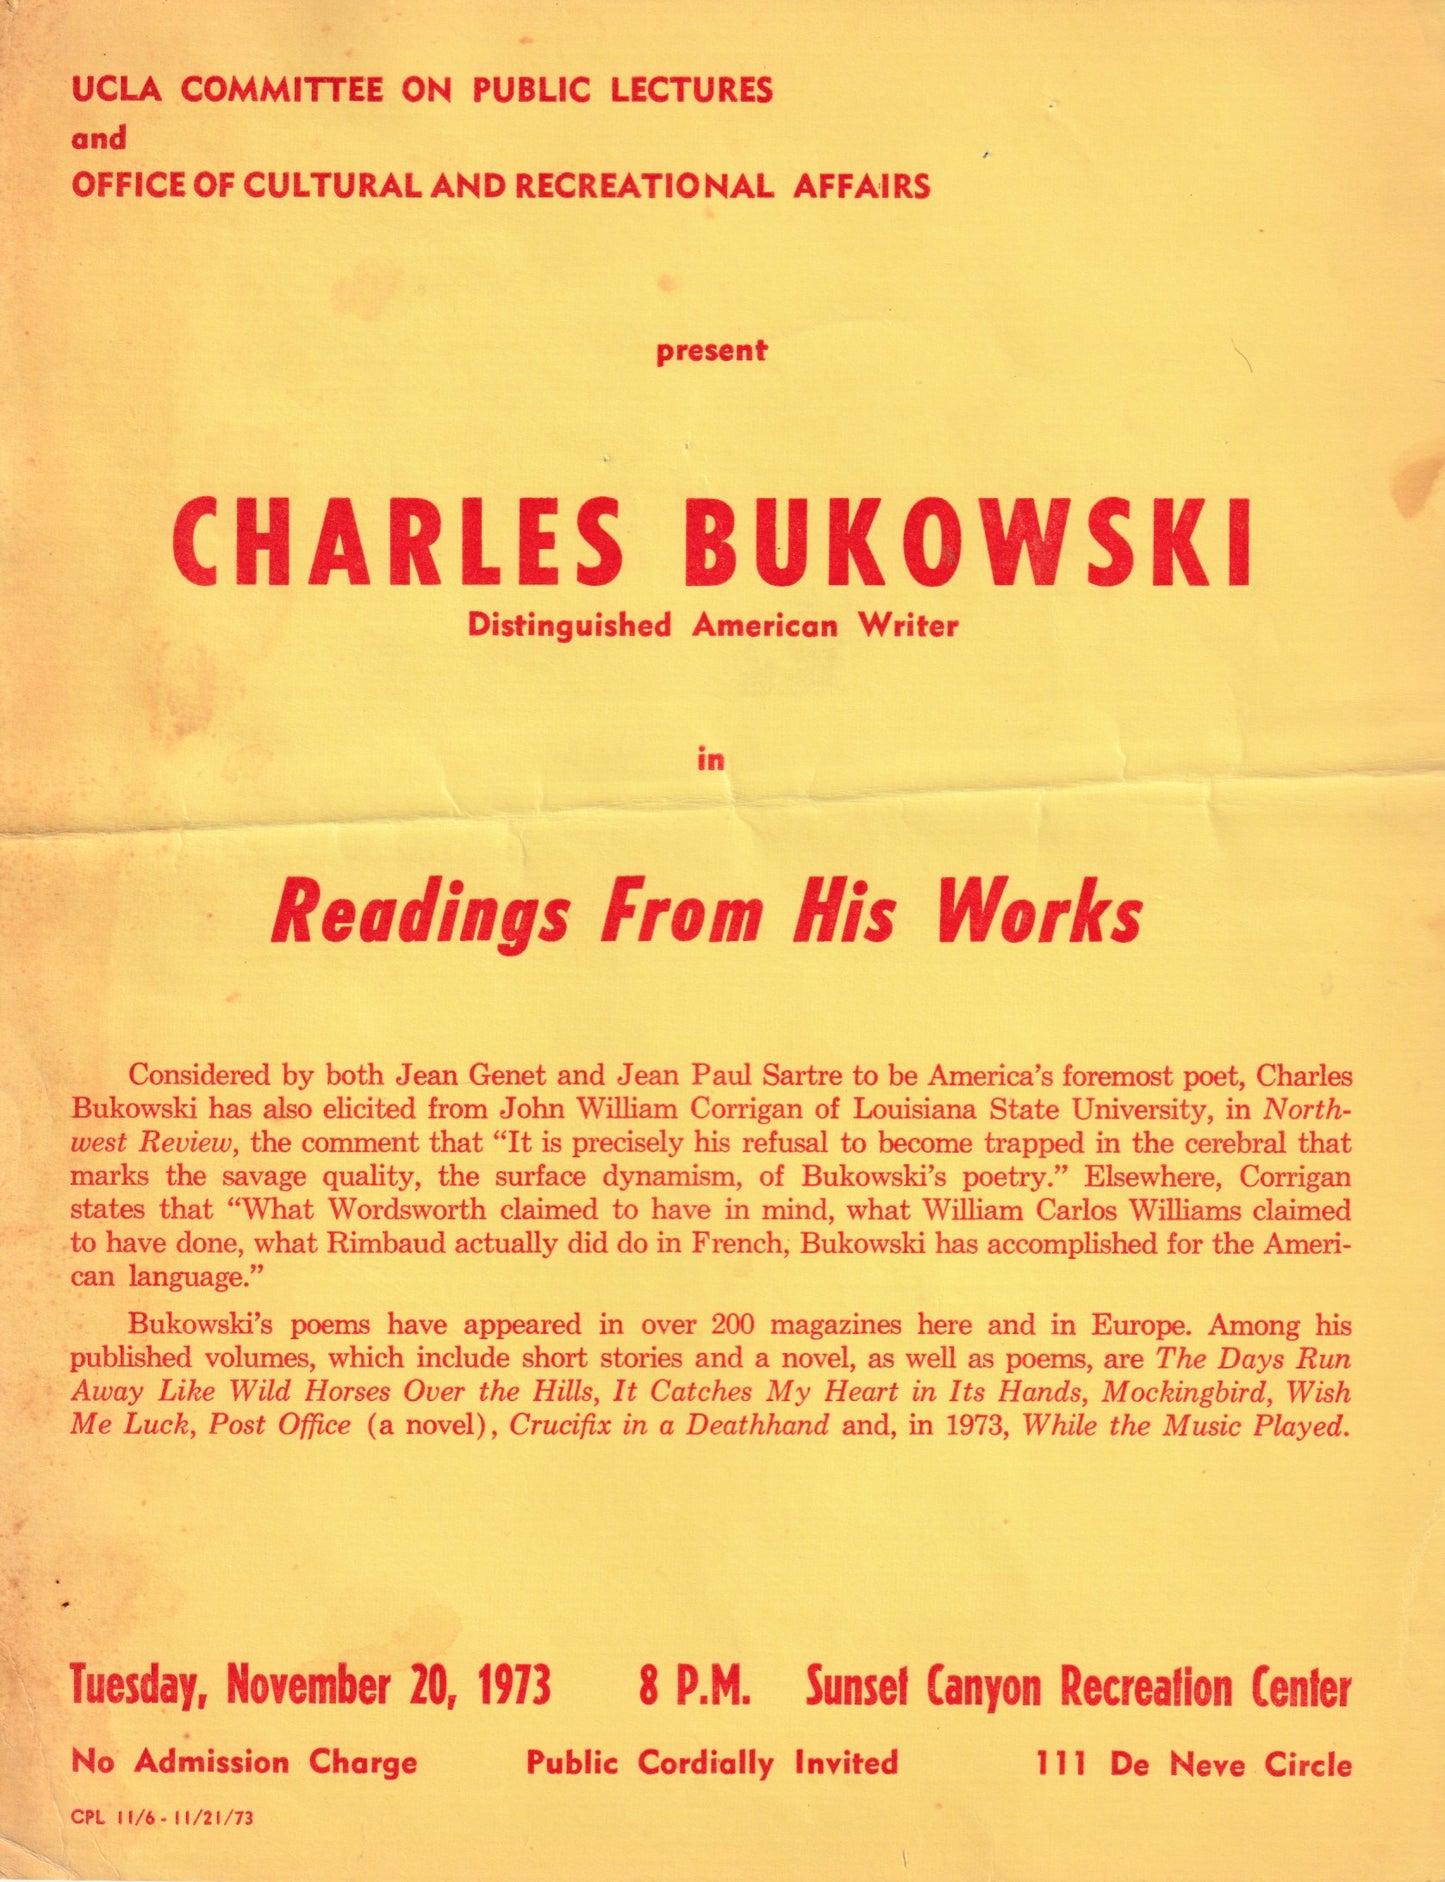 Poster for Bukowski Reading at UCLA Sunset Canyon Recreation Center, November 20, 1973